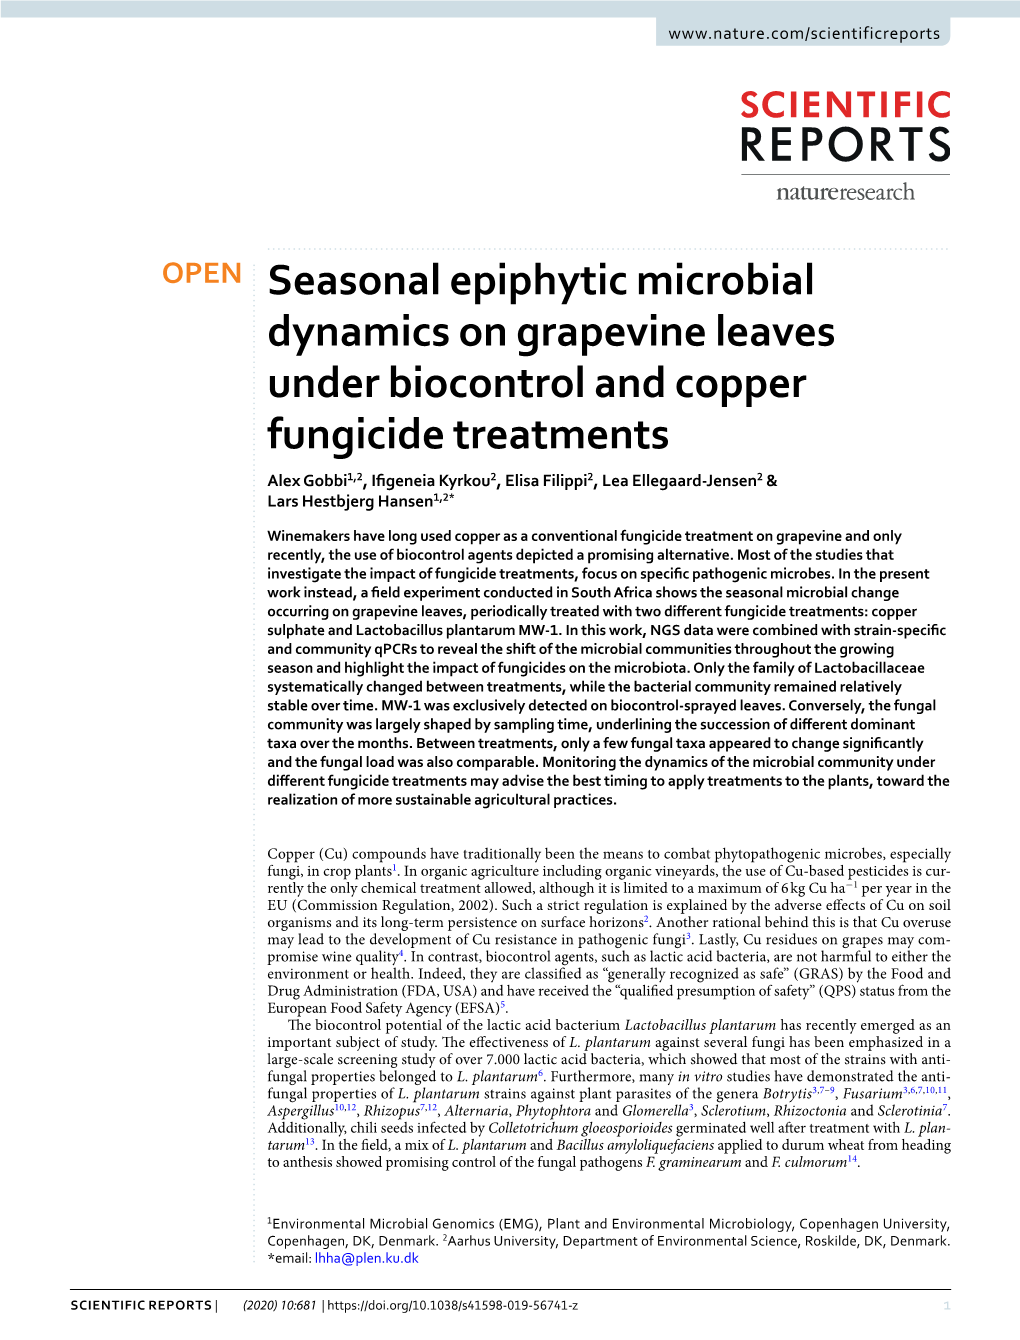 Seasonal Epiphytic Microbial Dynamics on Grapevine Leaves